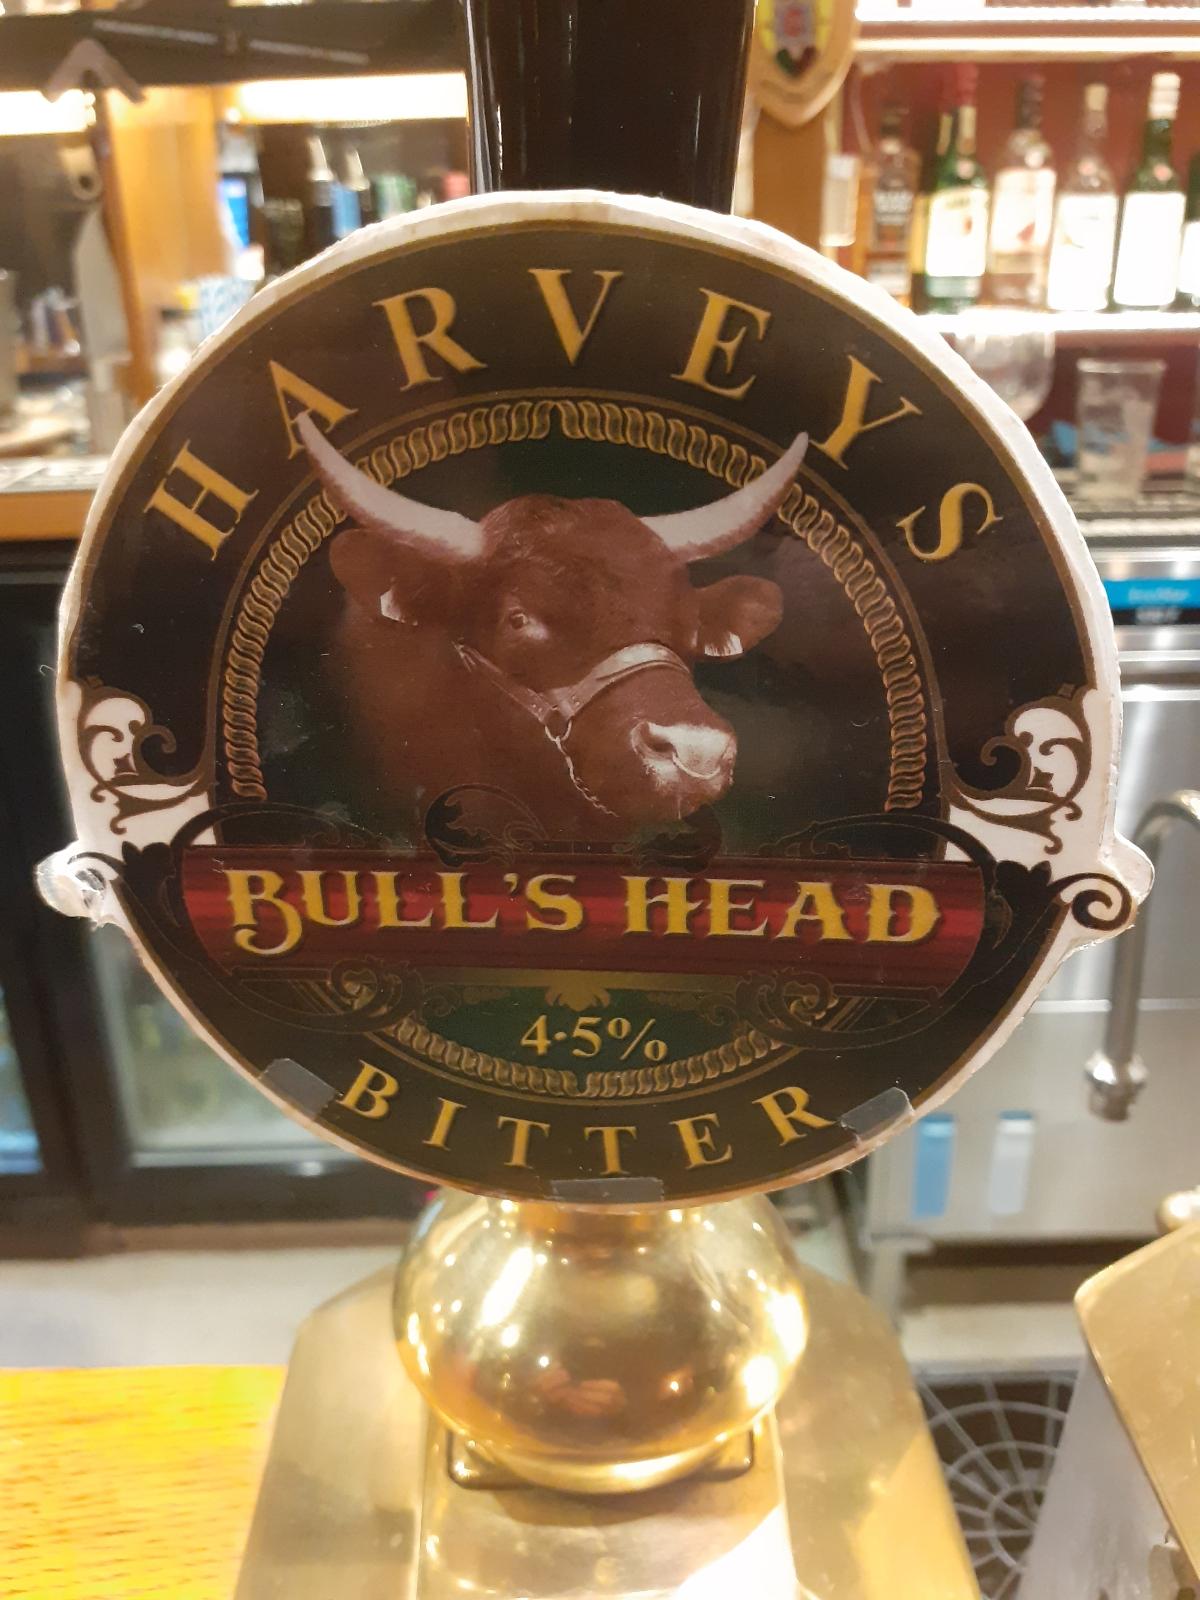 Bulls Head Bitter